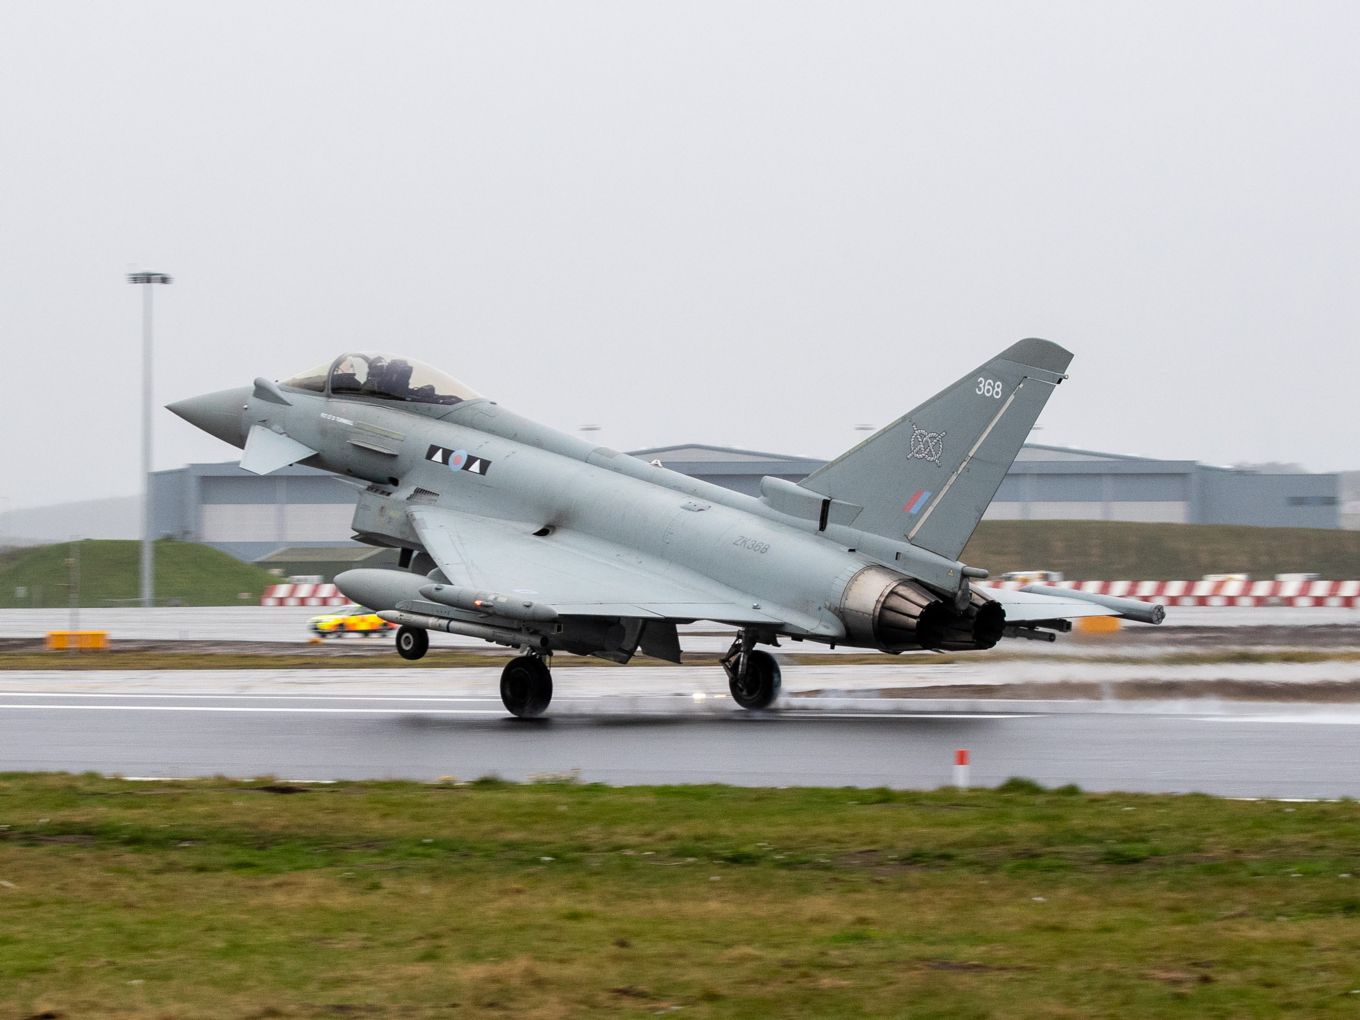 typhoon-lands-on-new-runway